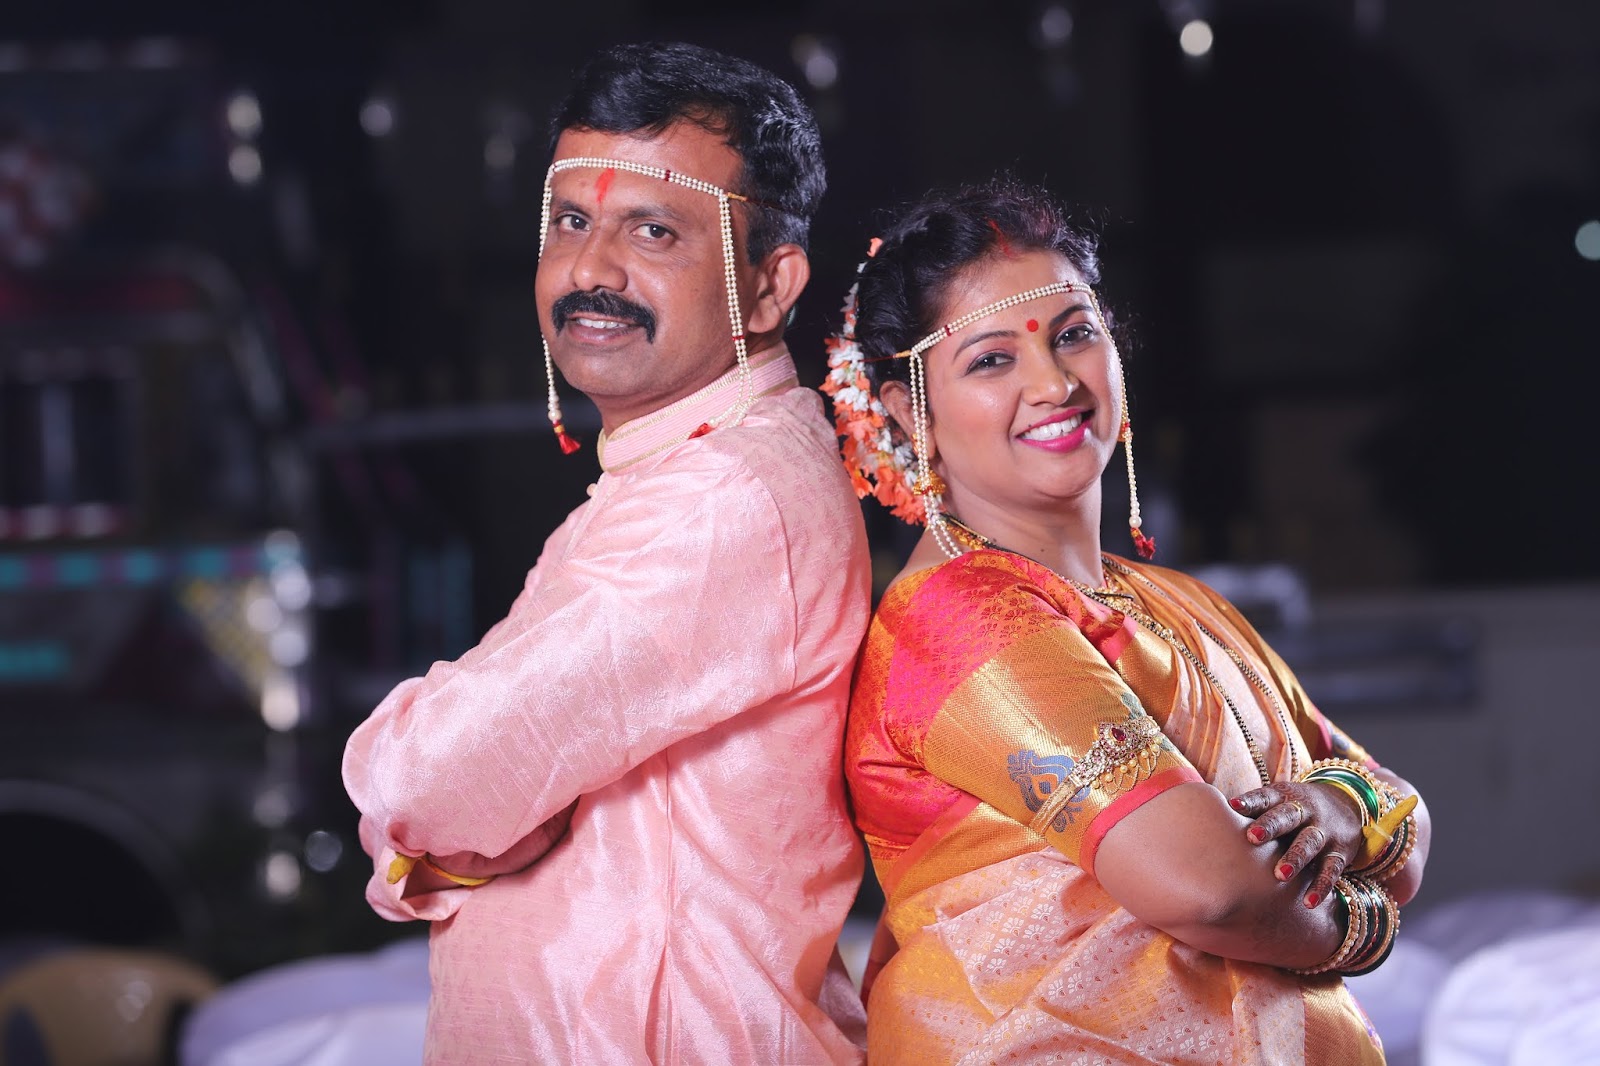 Madhosh Kiye Jaa: A Wedding in the Family